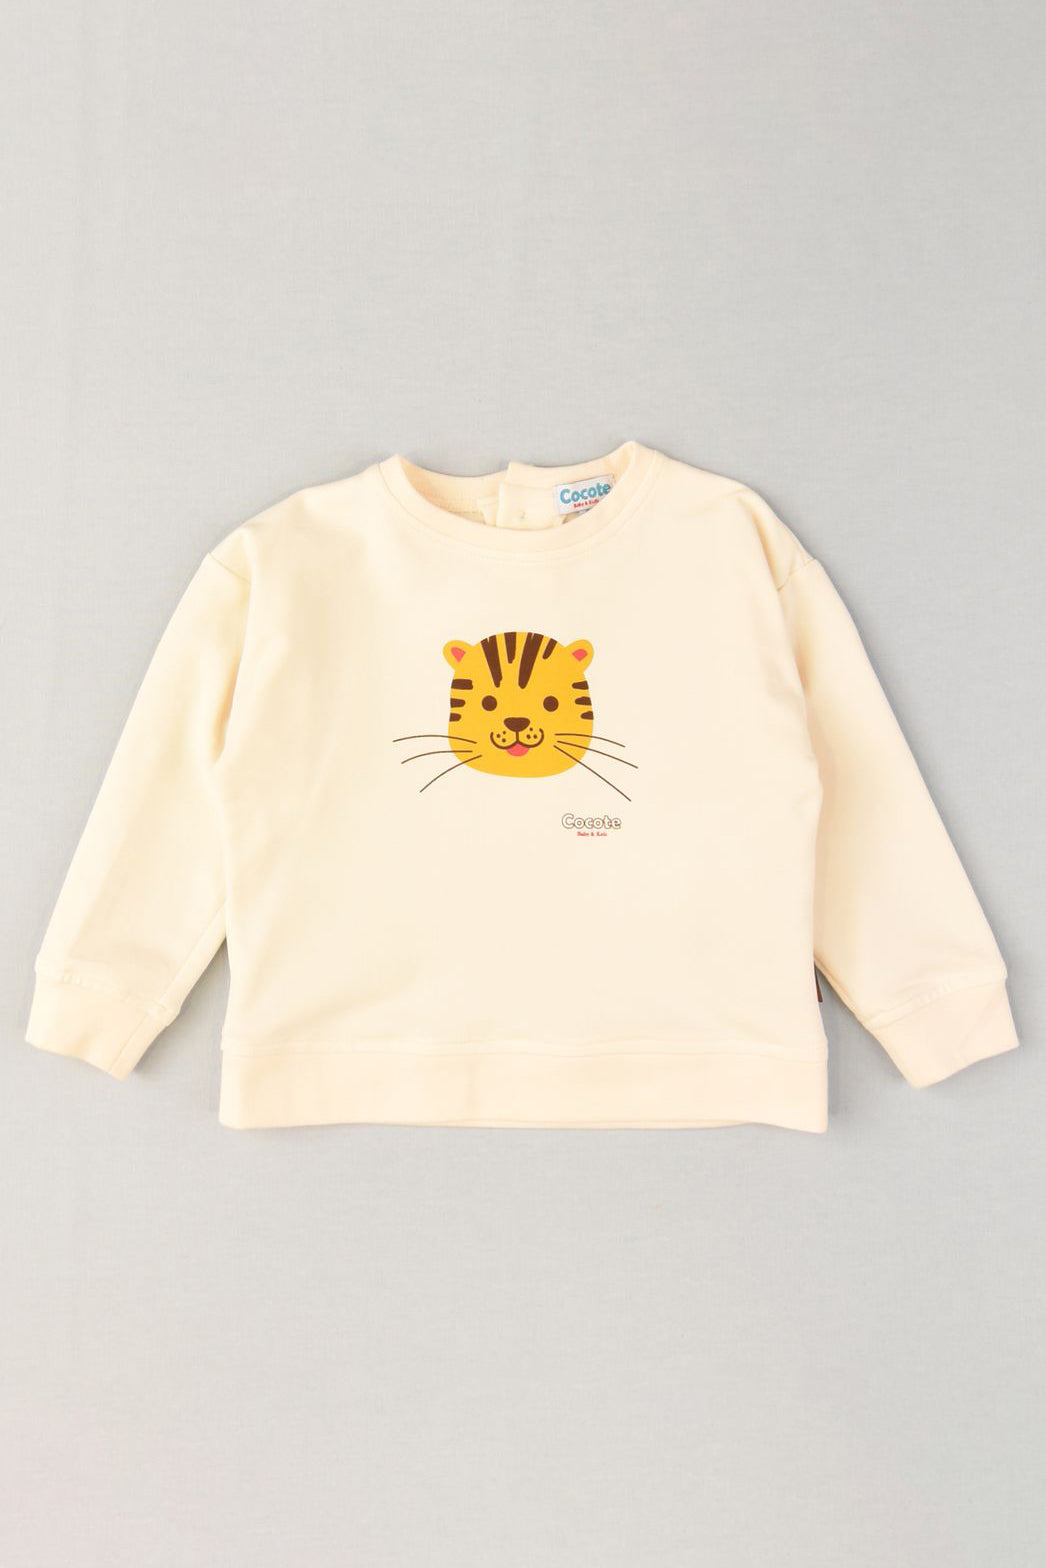 Cocote "Bruno" Cream Tiger Sweatshirt | Millie and John